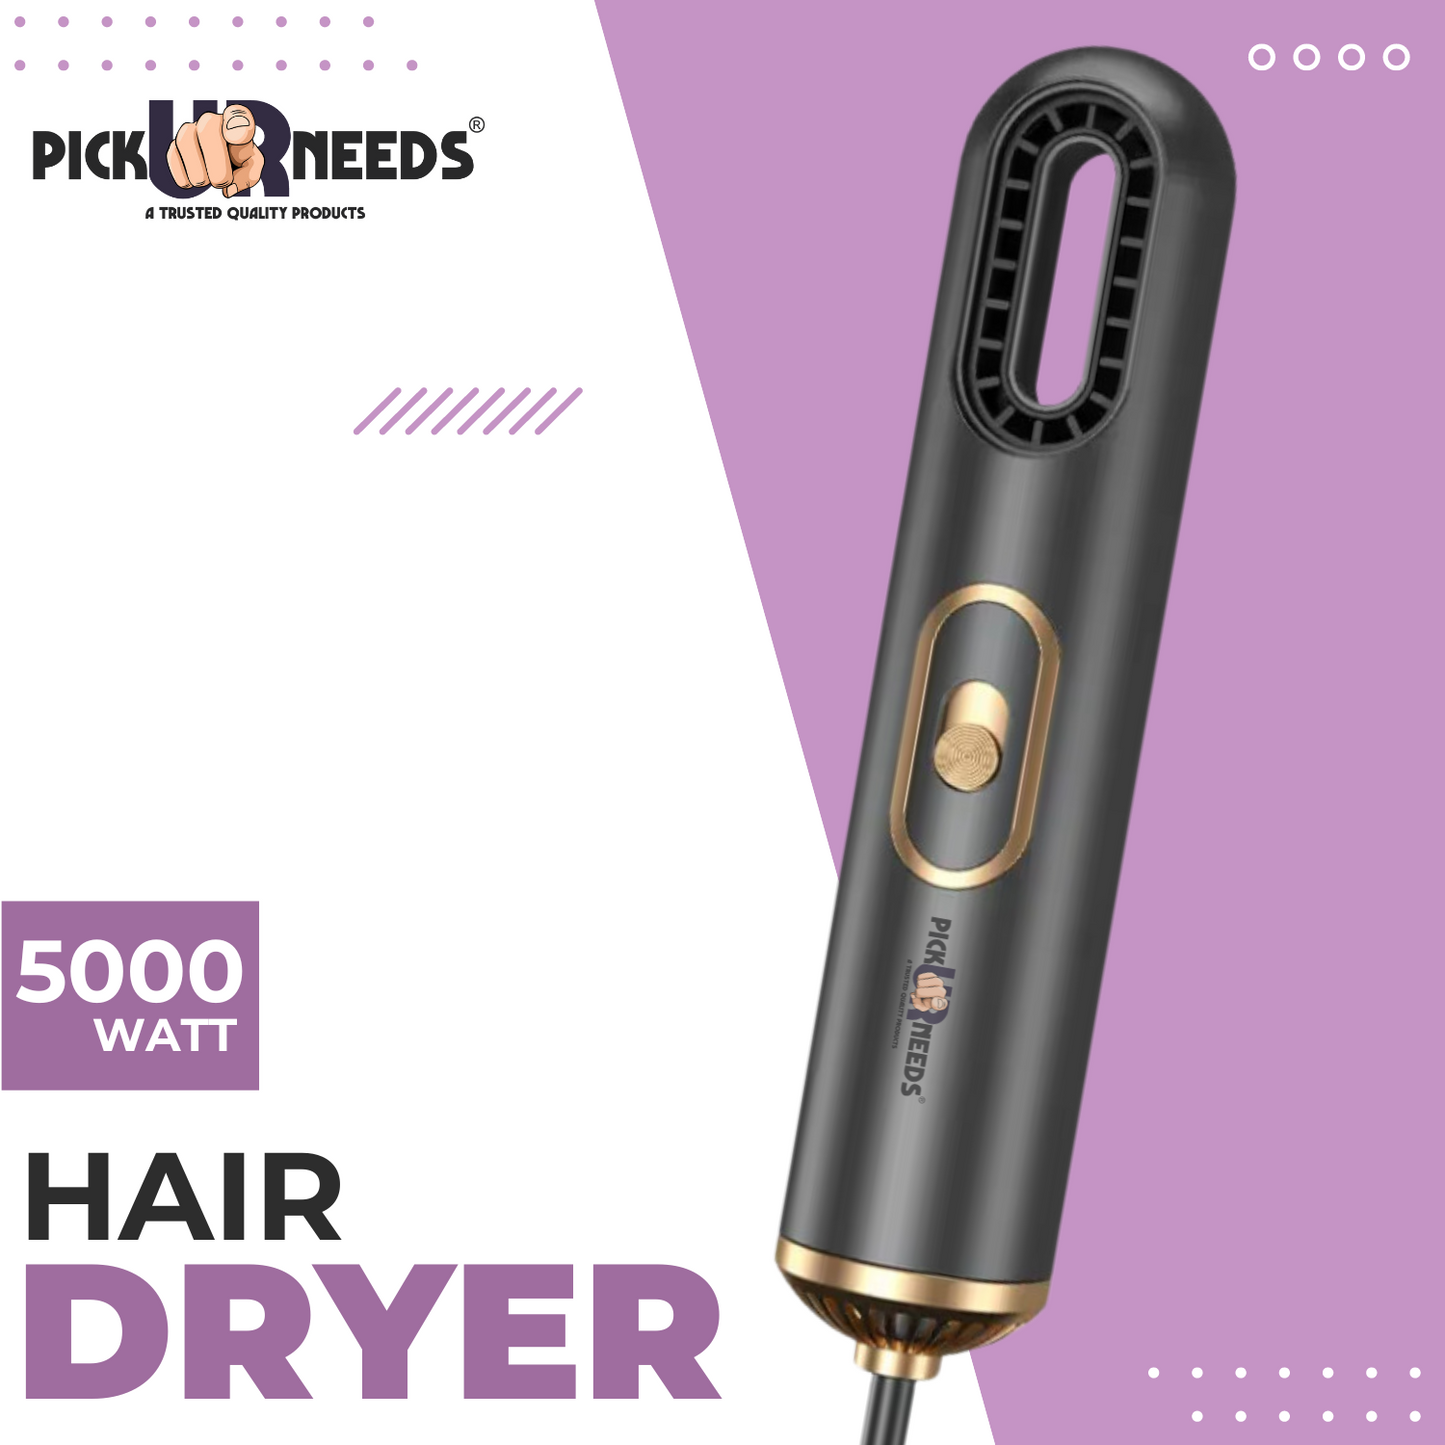 Pick Ur Needs 5000 Watt 3 In 1 Professional Hair Dryer for Men & Women Salon Grade With Hot & Cold Setting